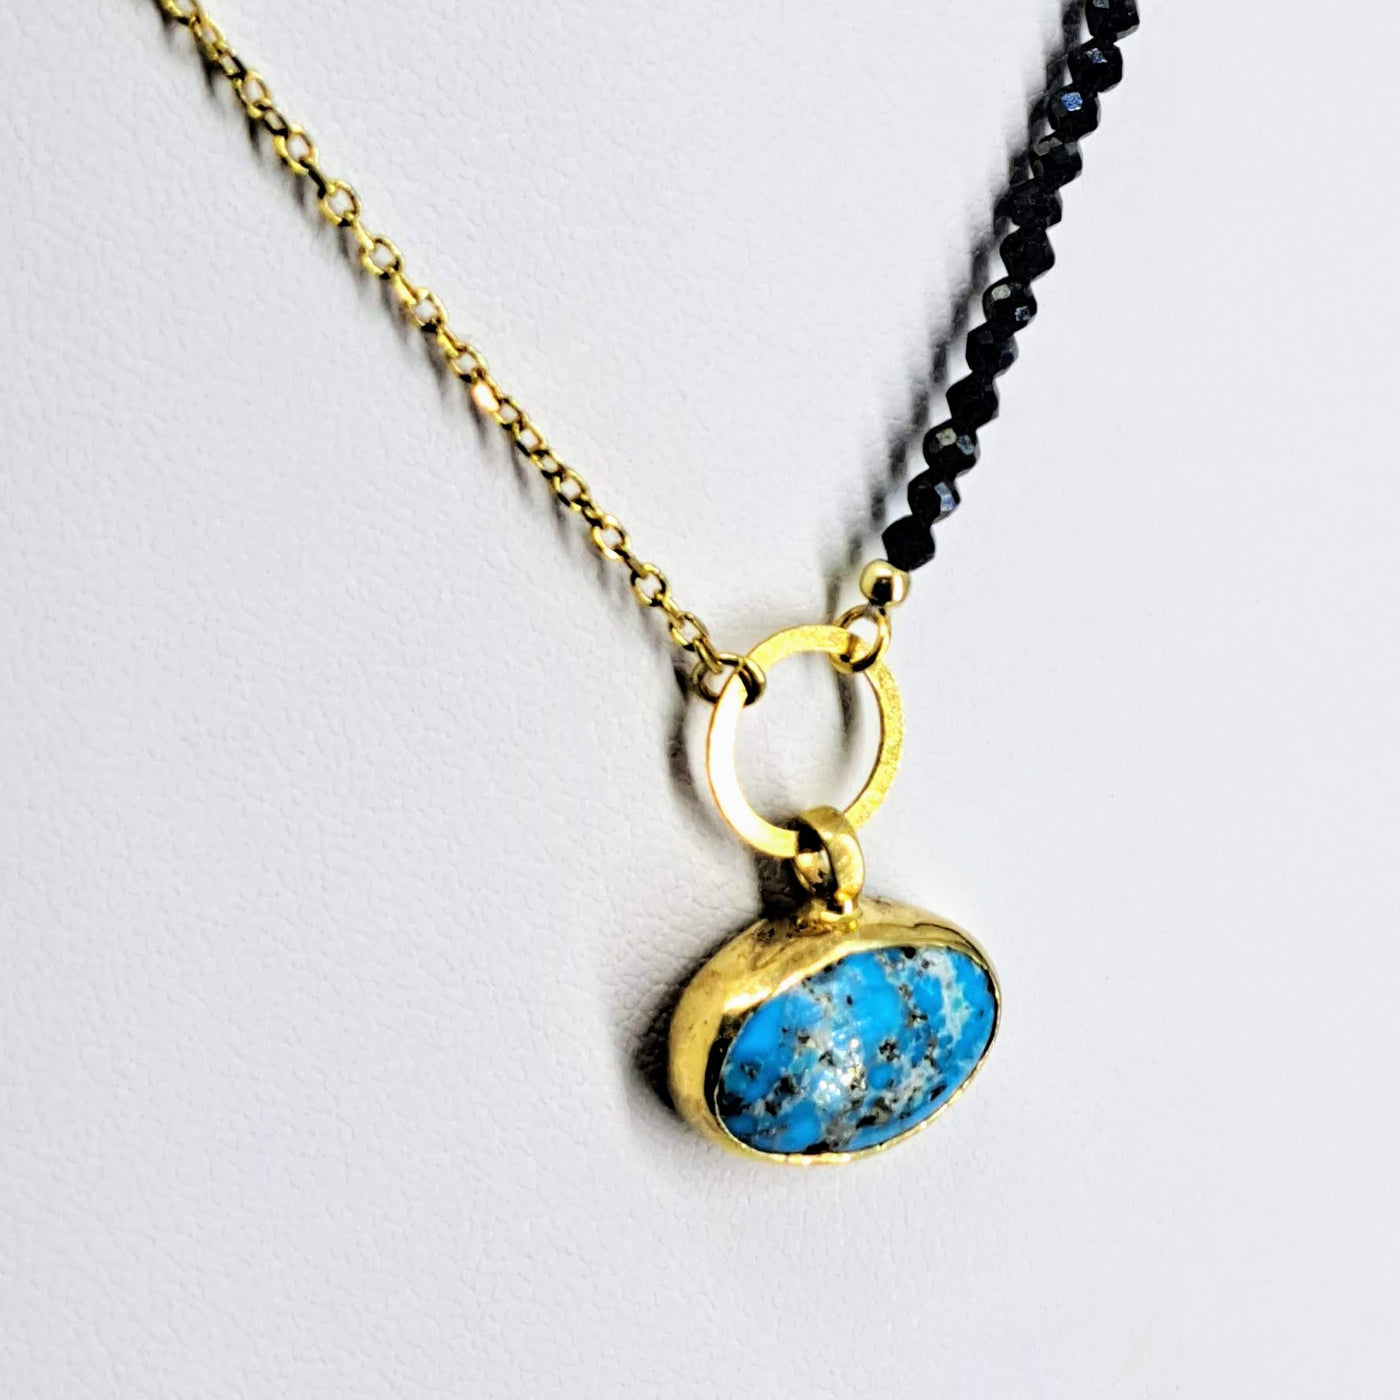 "Sky Light" Pendant Necklace - Turquoise, Black Spinel, Gold Sterling